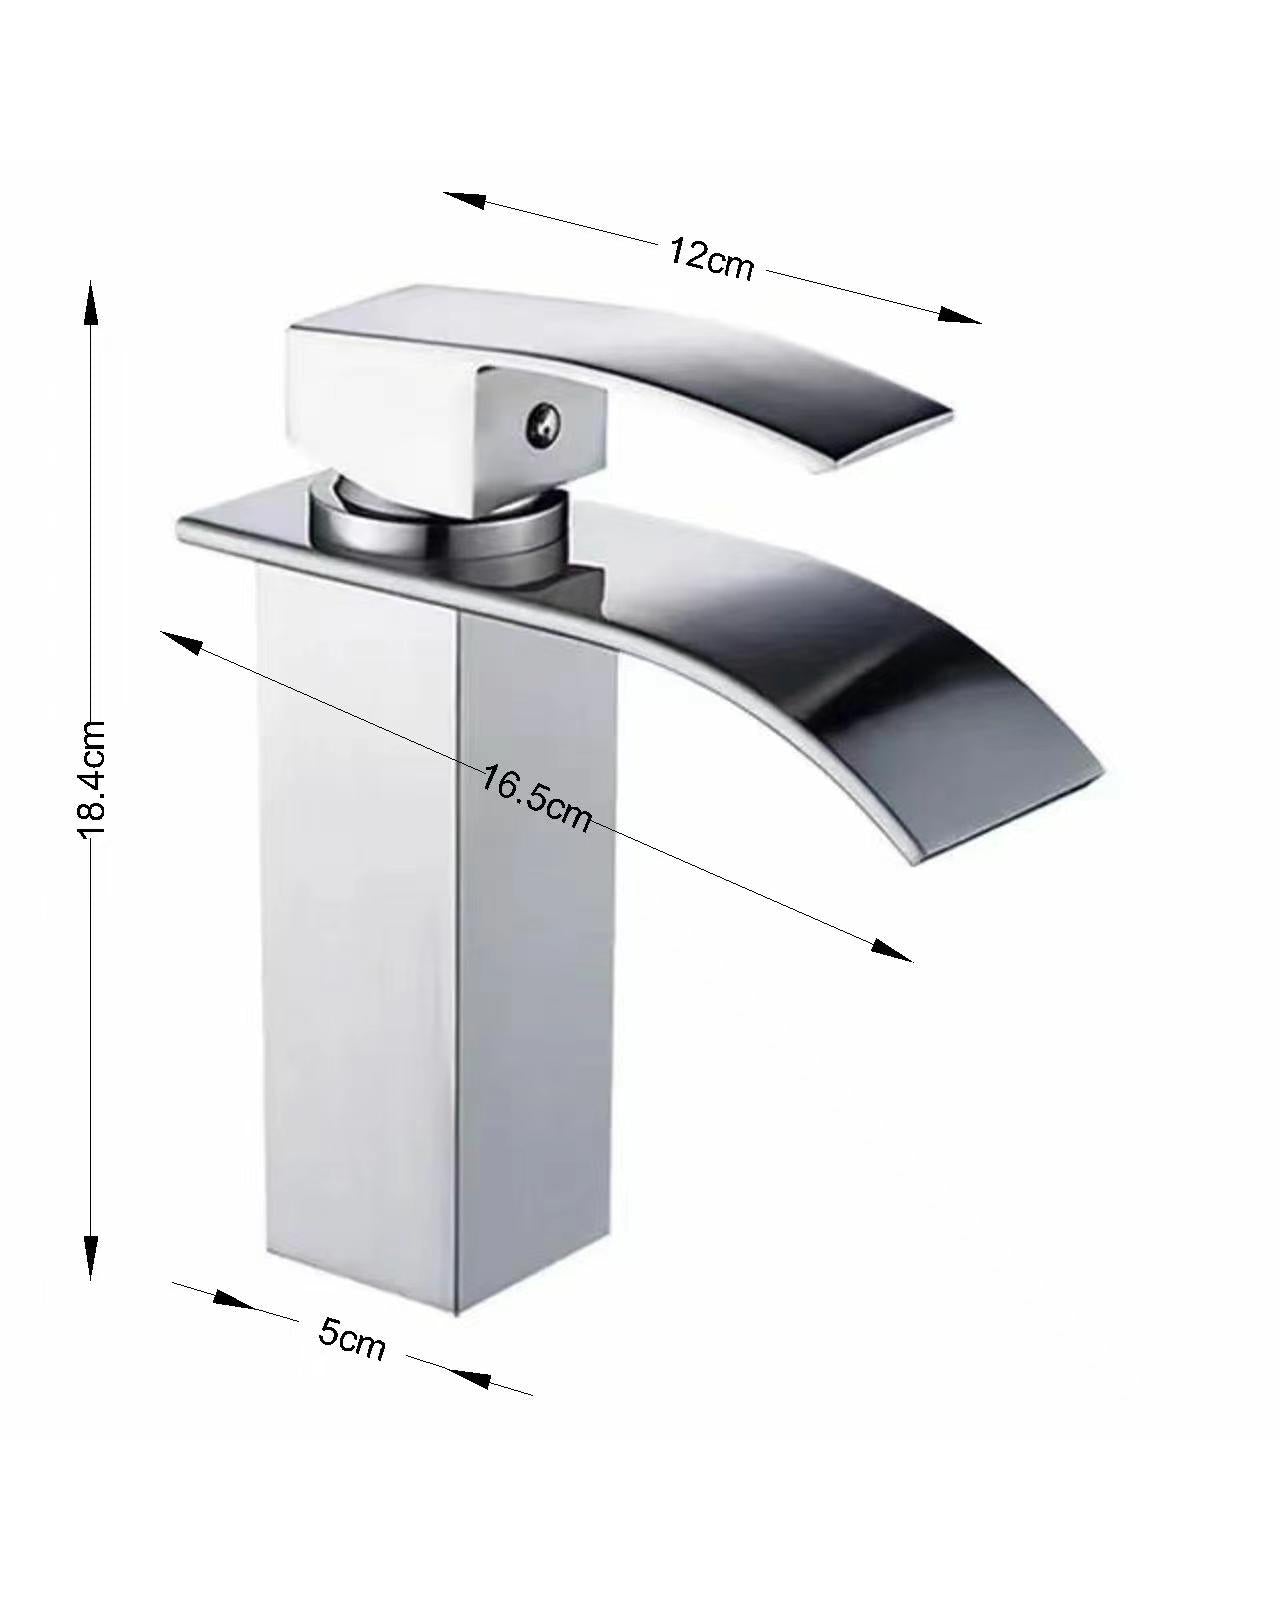 FA2020-ED/B5-CH chrome stainless steel bathroom faucet $59.